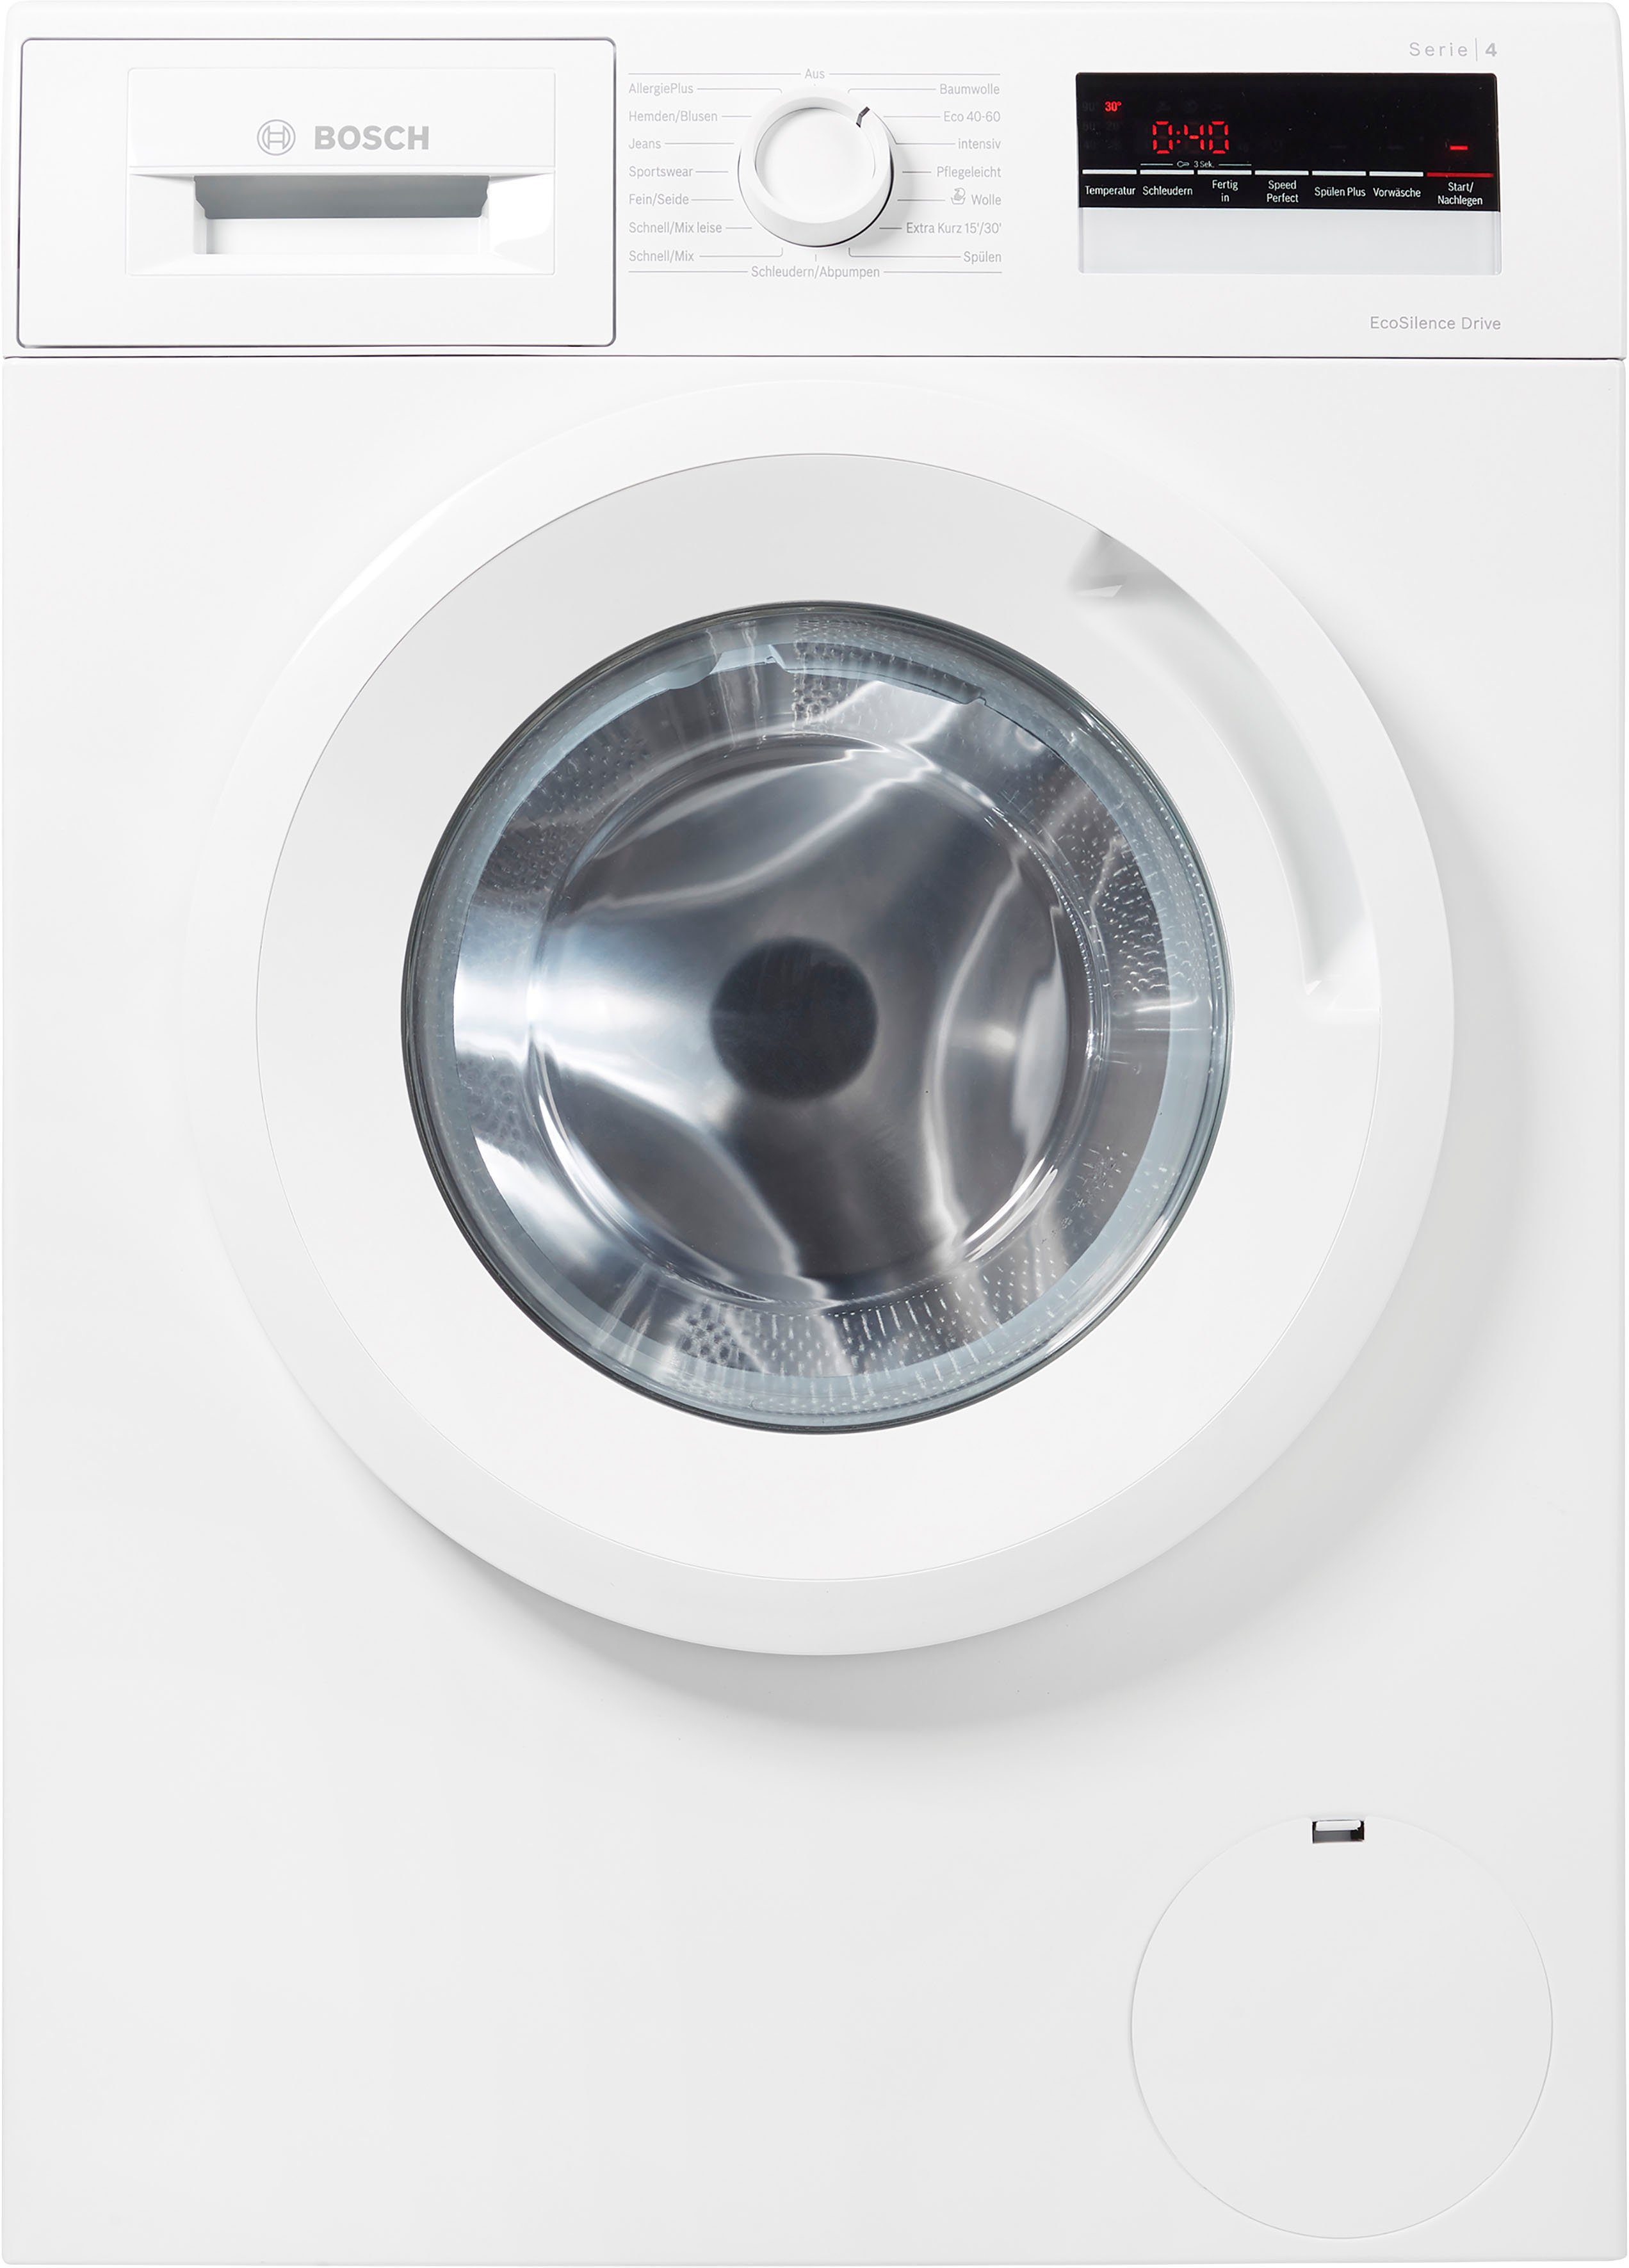 BOSCH Waschmaschine 4 WAN282A2, 7 kg, 1400 U/min | OTTO